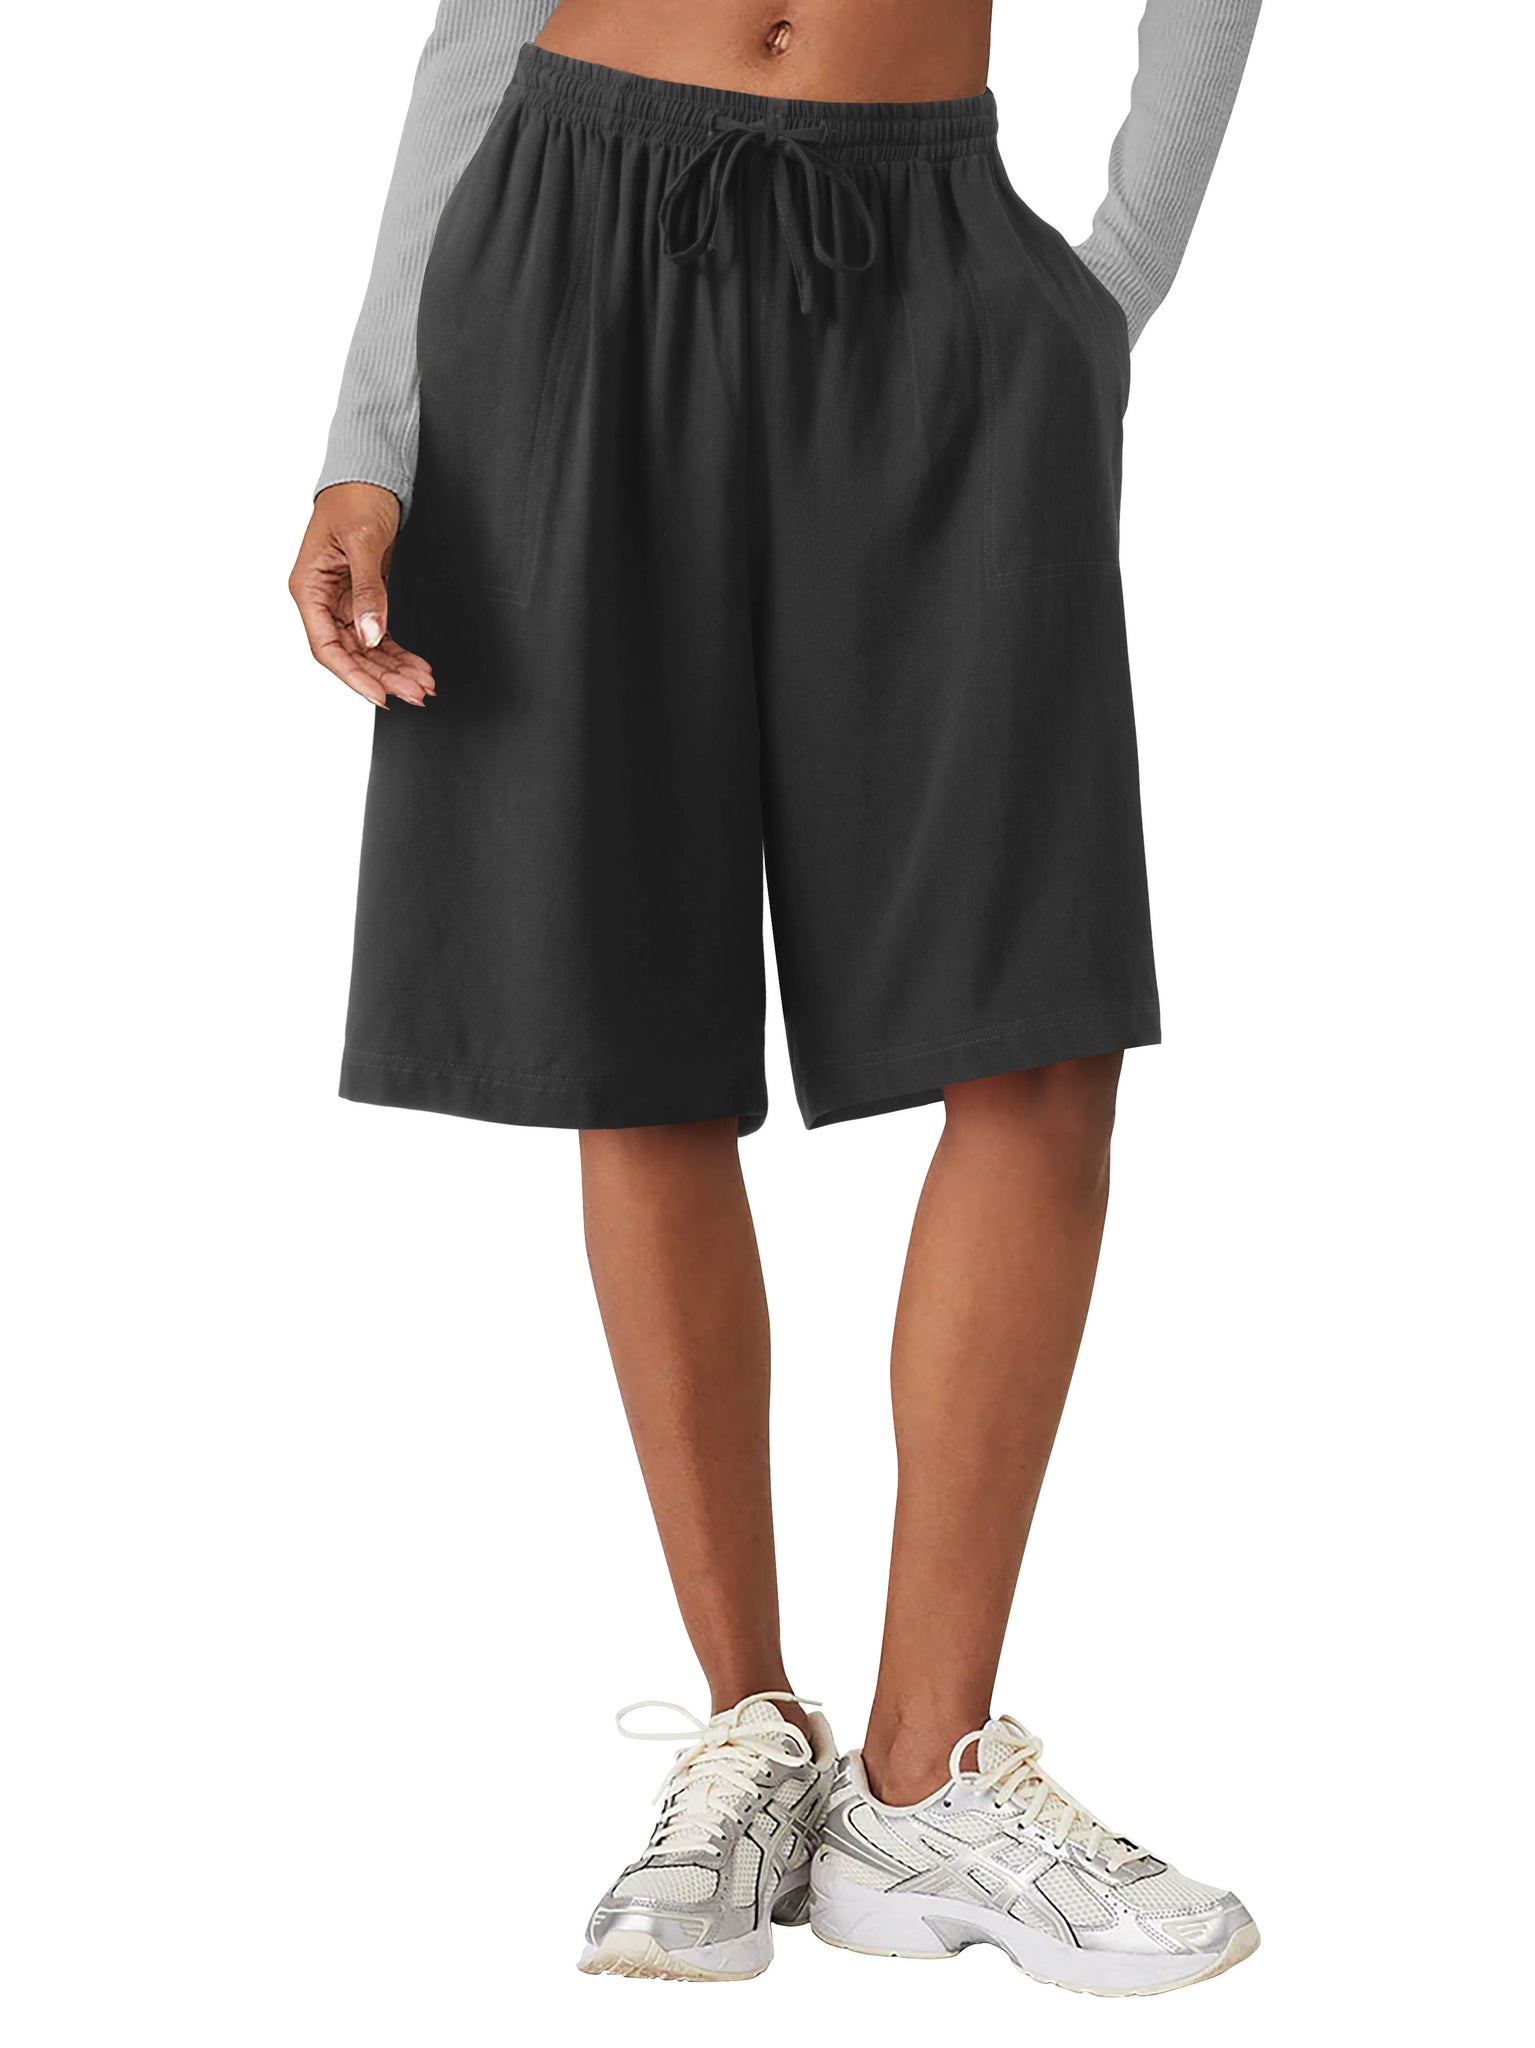 Women's Premium Shorts- Black